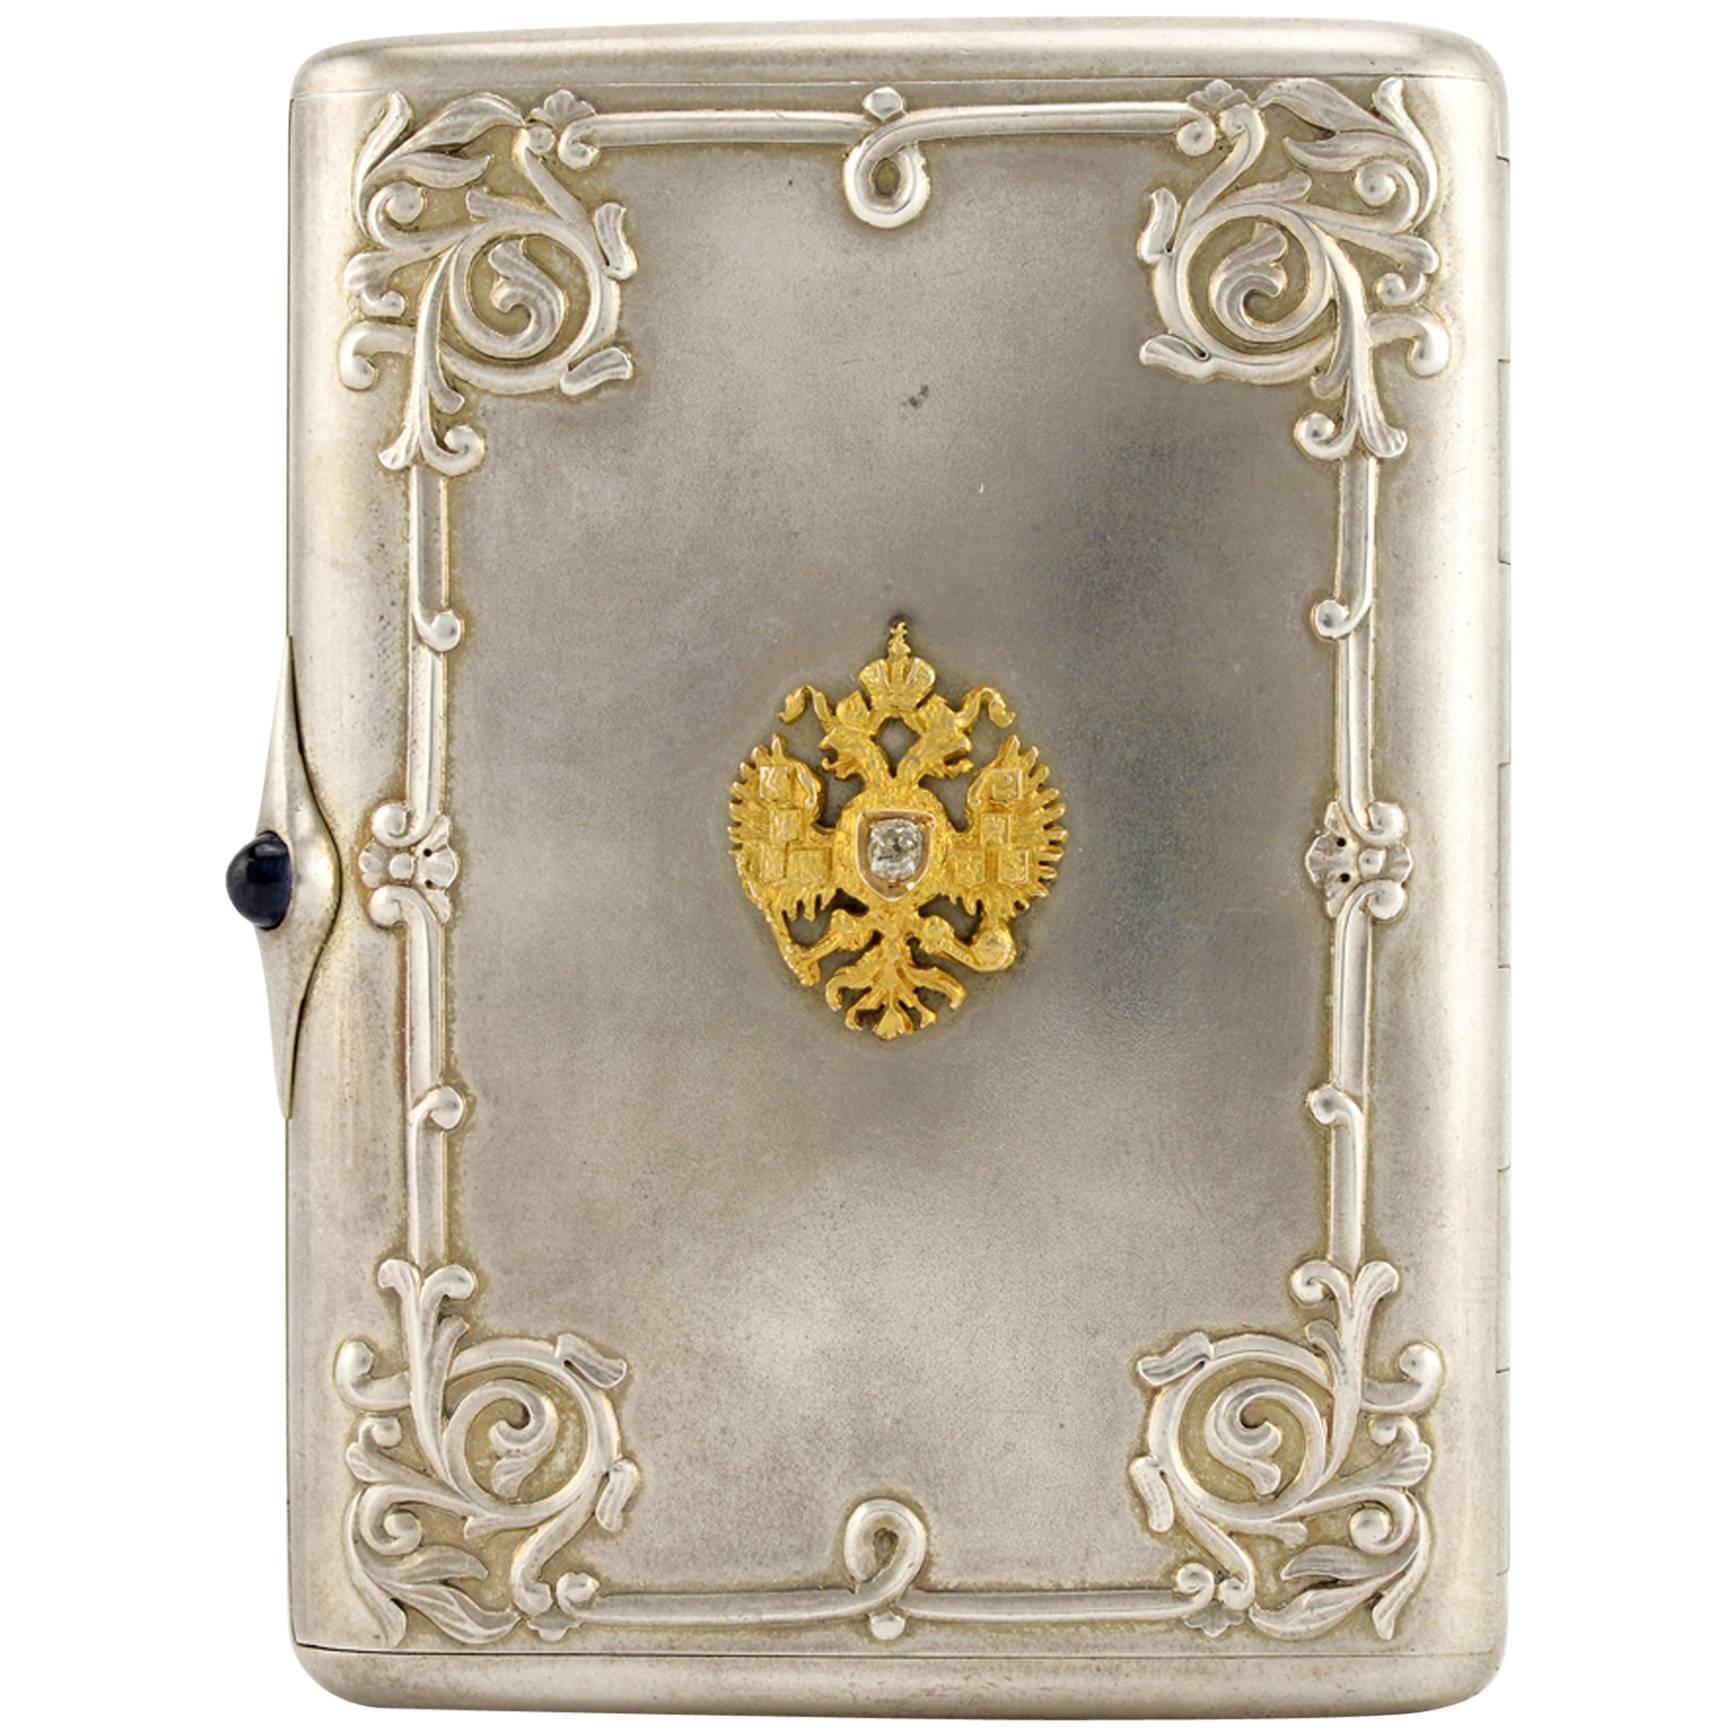 Fabergé Imperial Presentation Jeweled Silver Cigarette Case